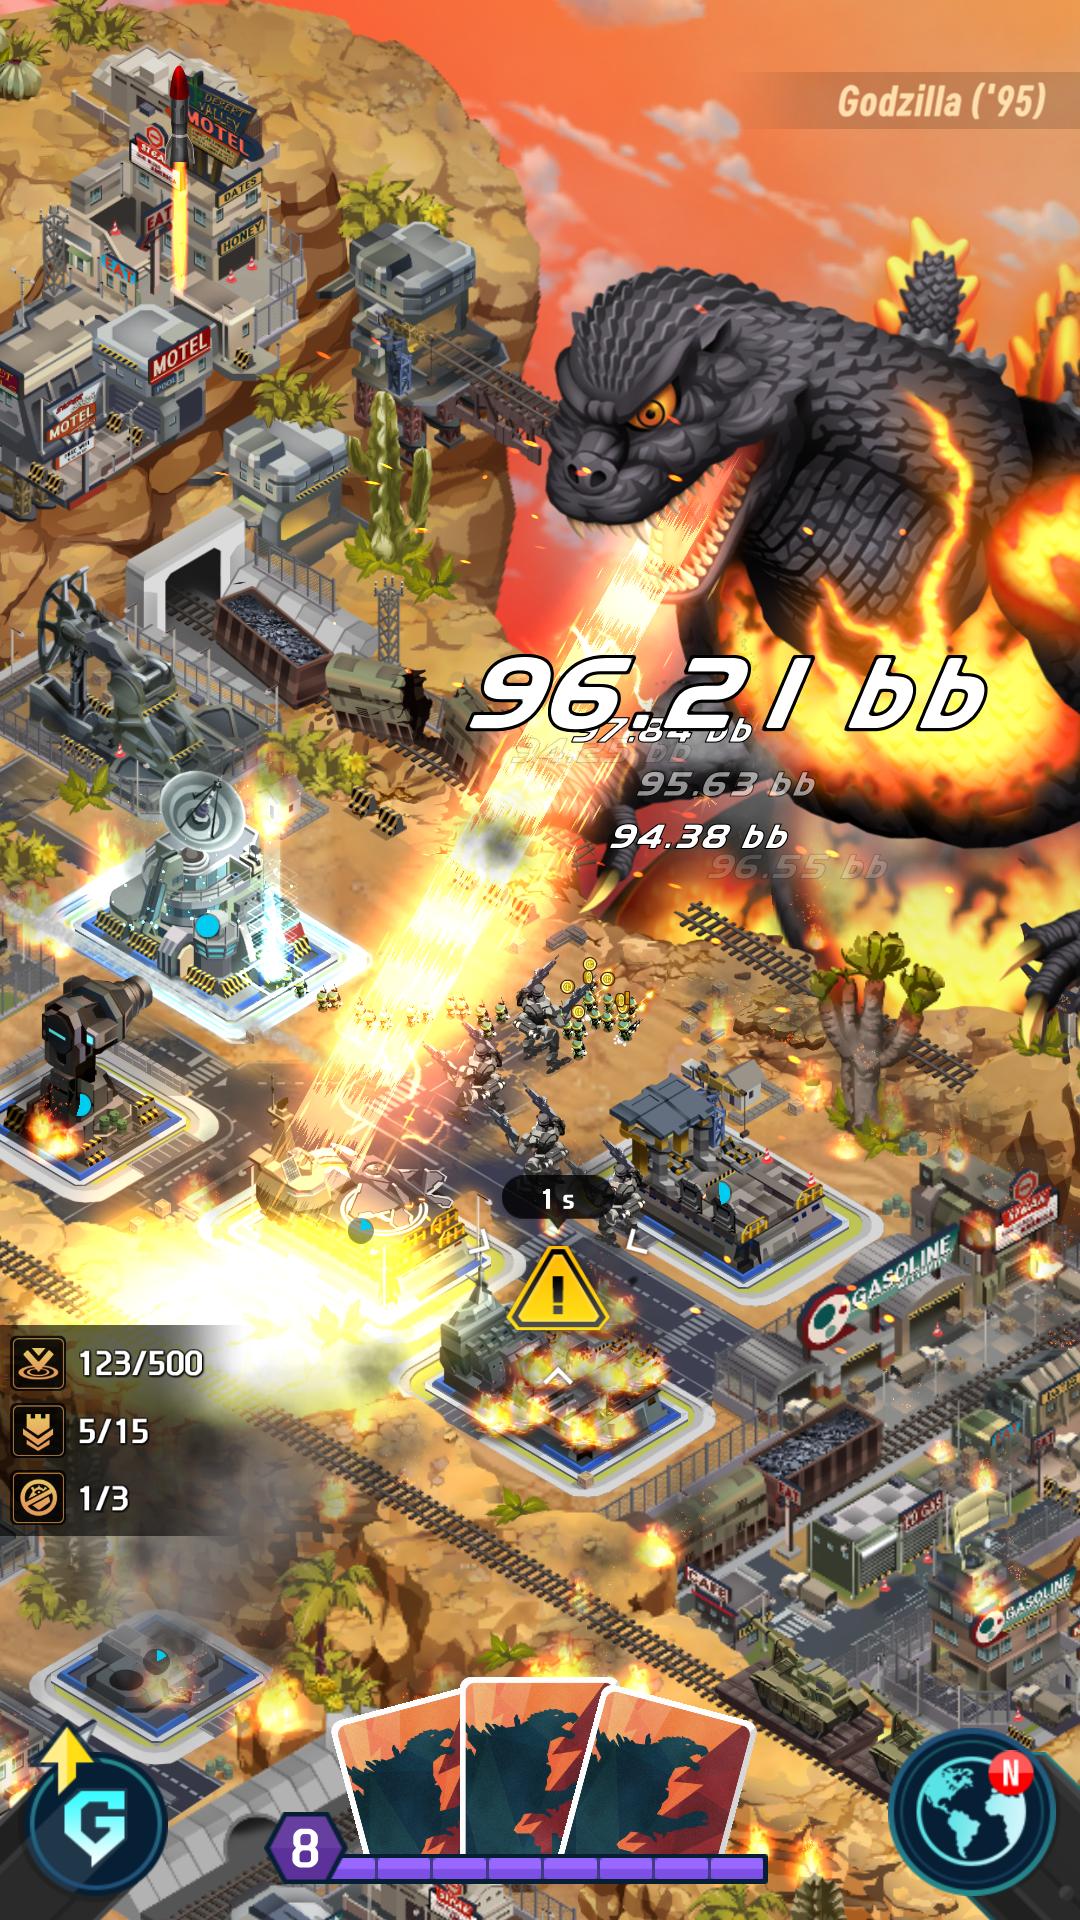 Godzilla Defense Force For Android Apk Download - godzilla free roblox